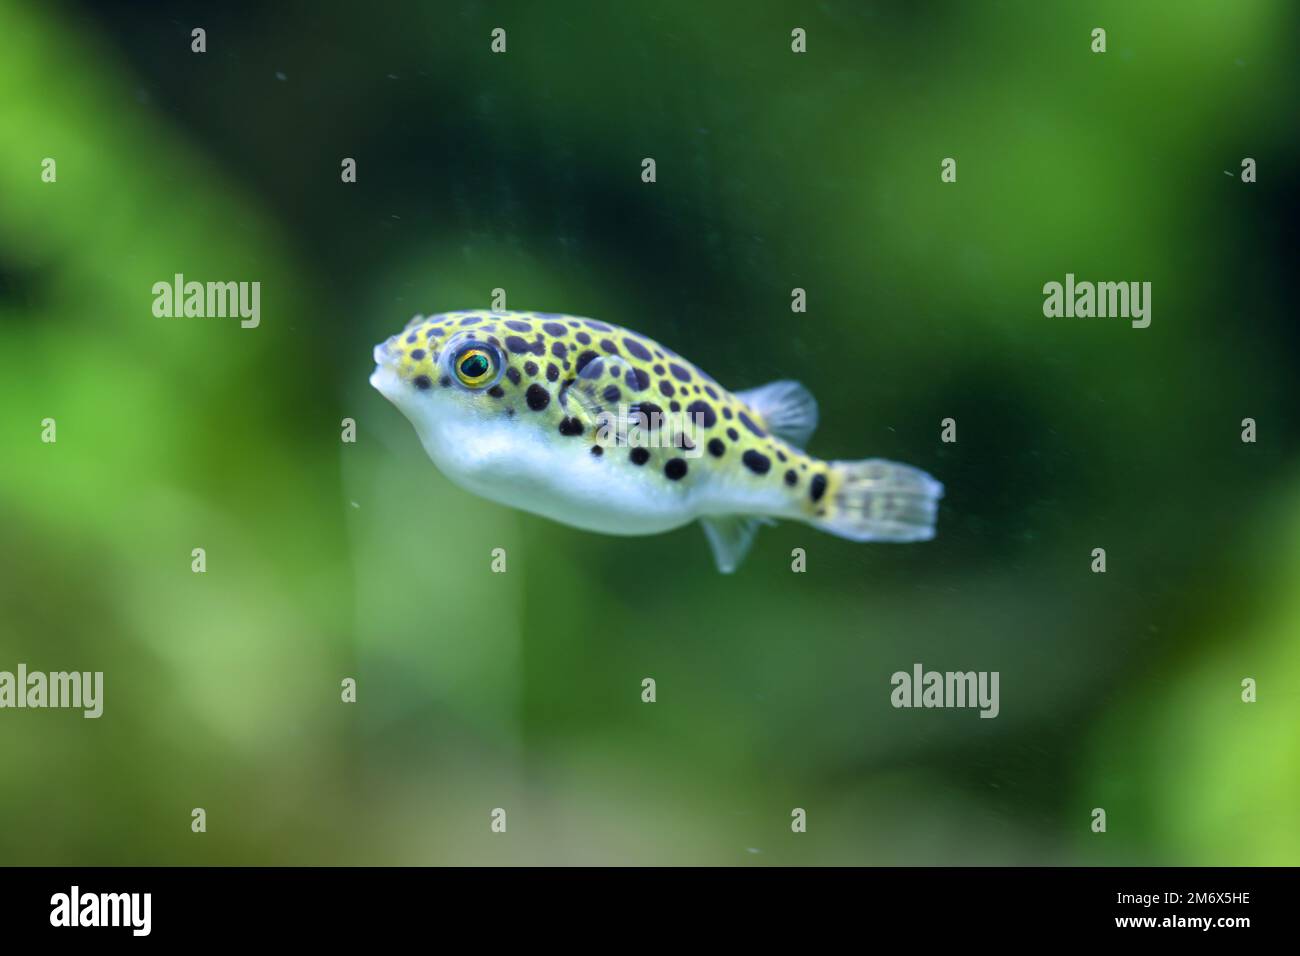 Aquarium fish snails hi-res stock photography and images - Alamy